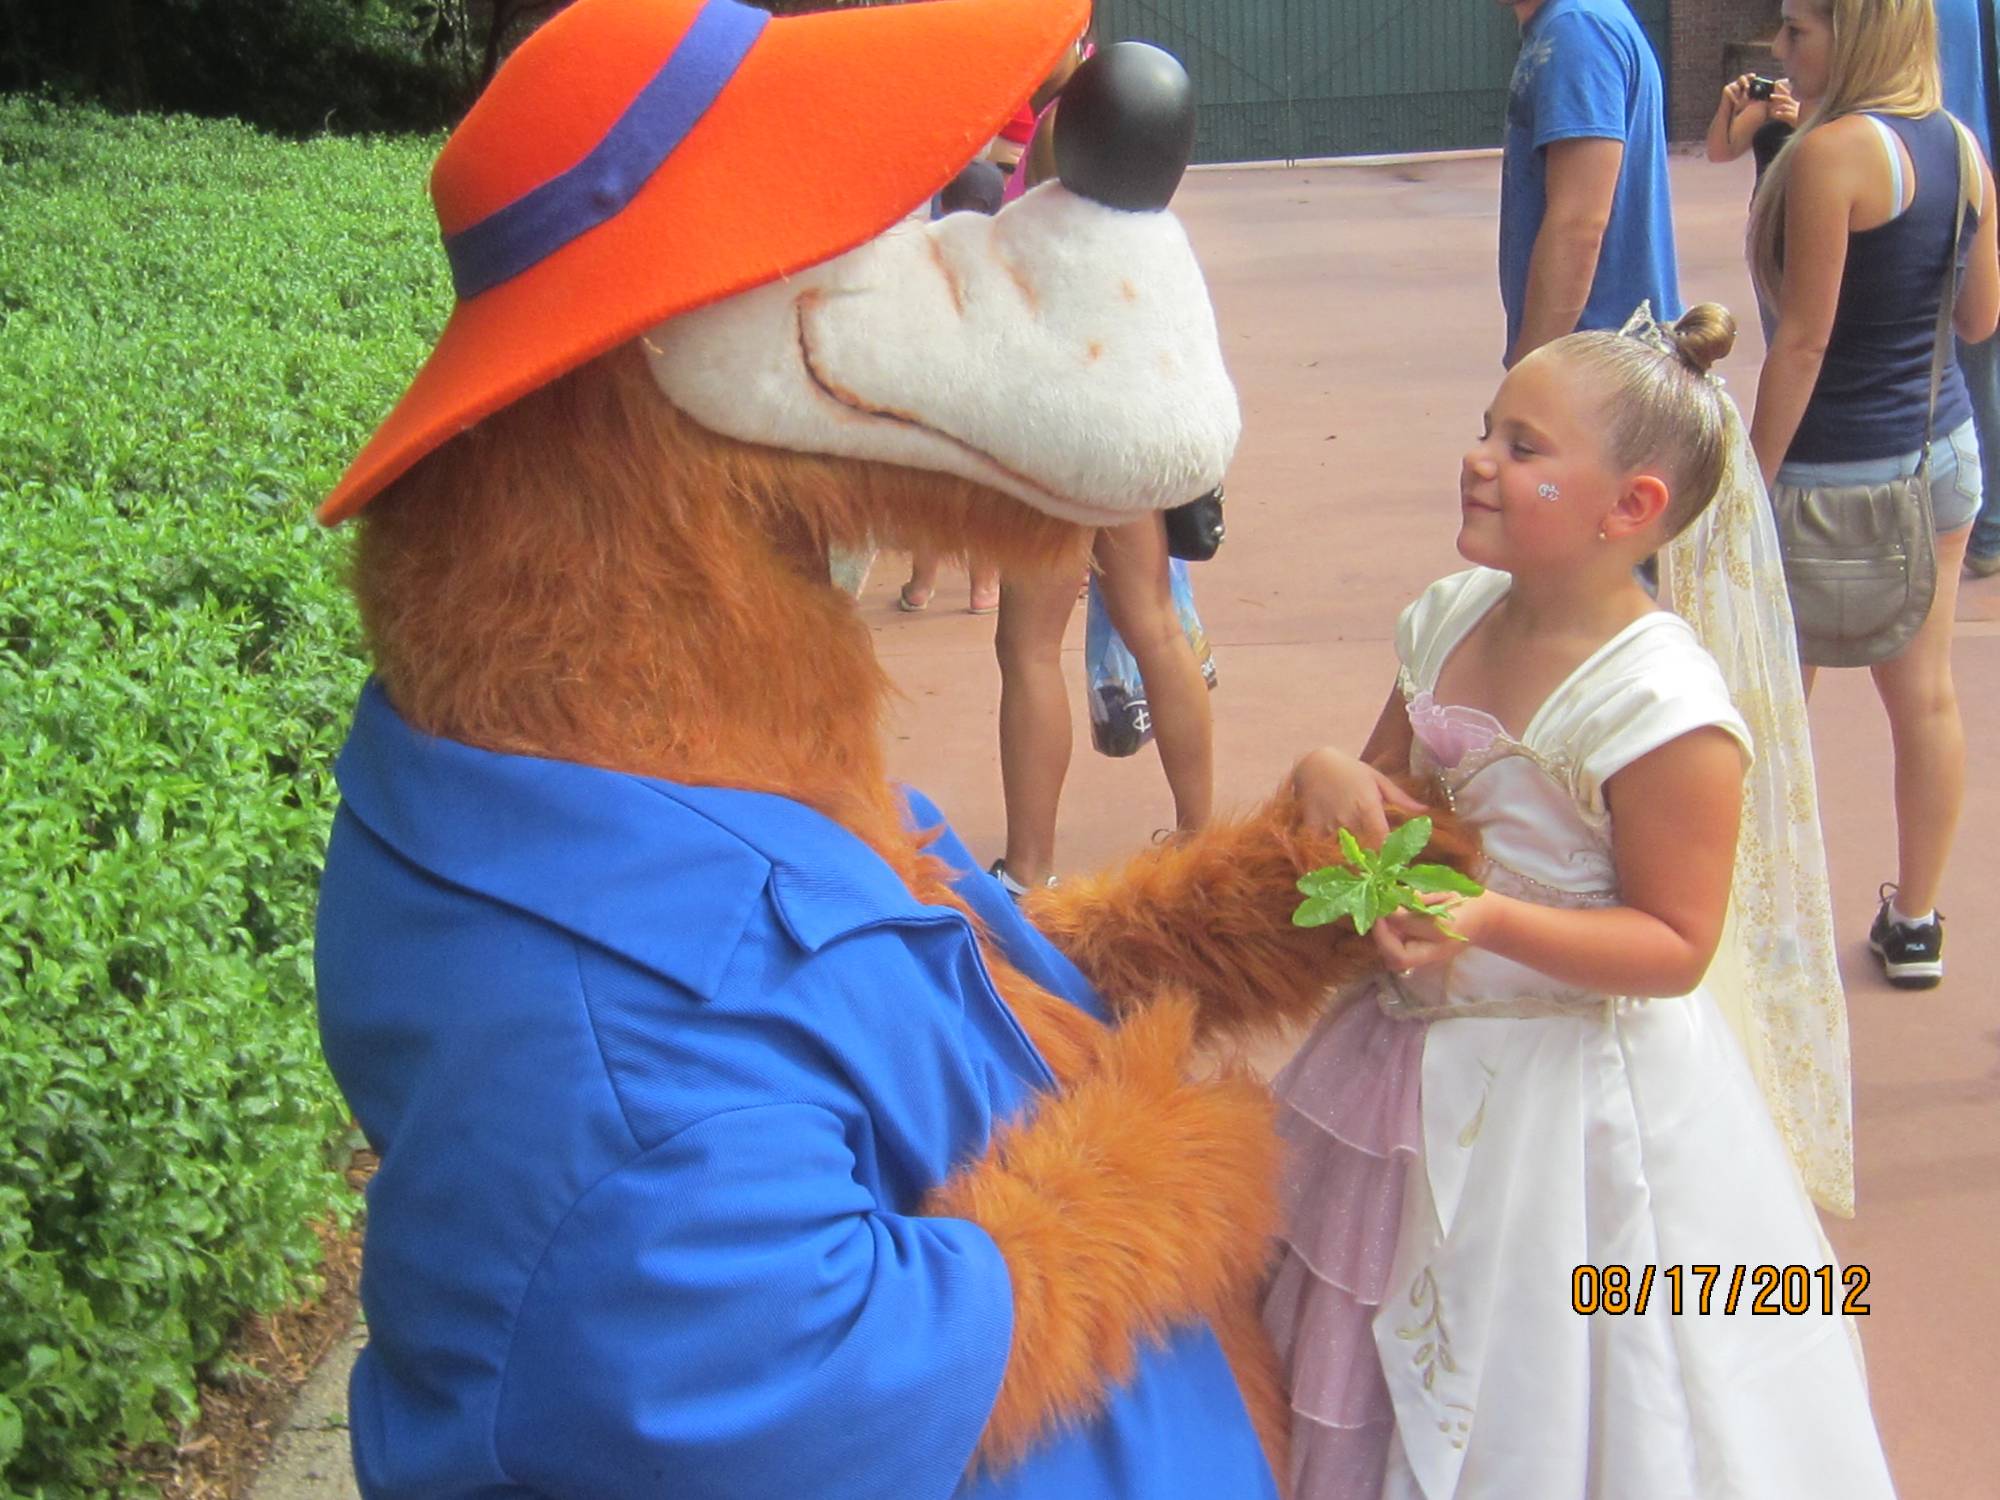 Brer Bear gives my princess a flower